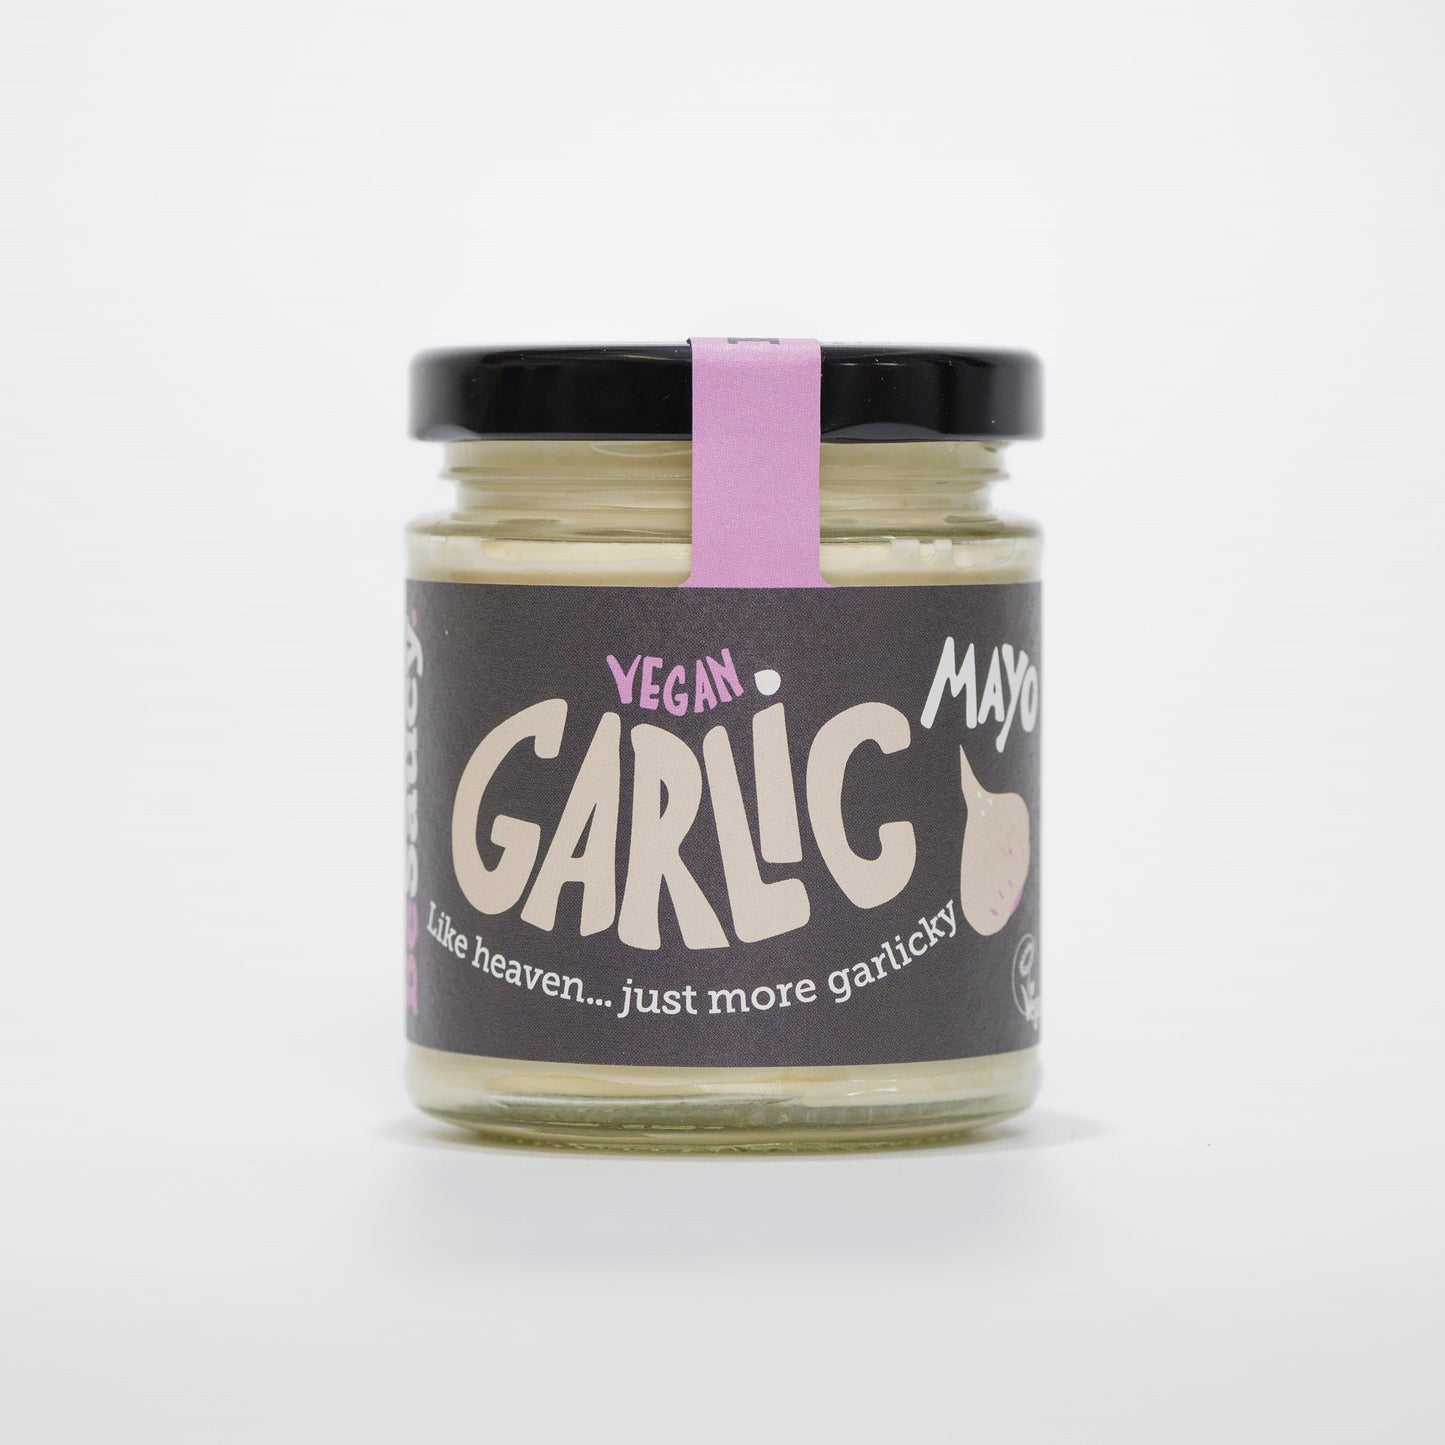 Vegan Garlic Mayonnaise - Silky Smoothness with Heavenly Garlic Flavor